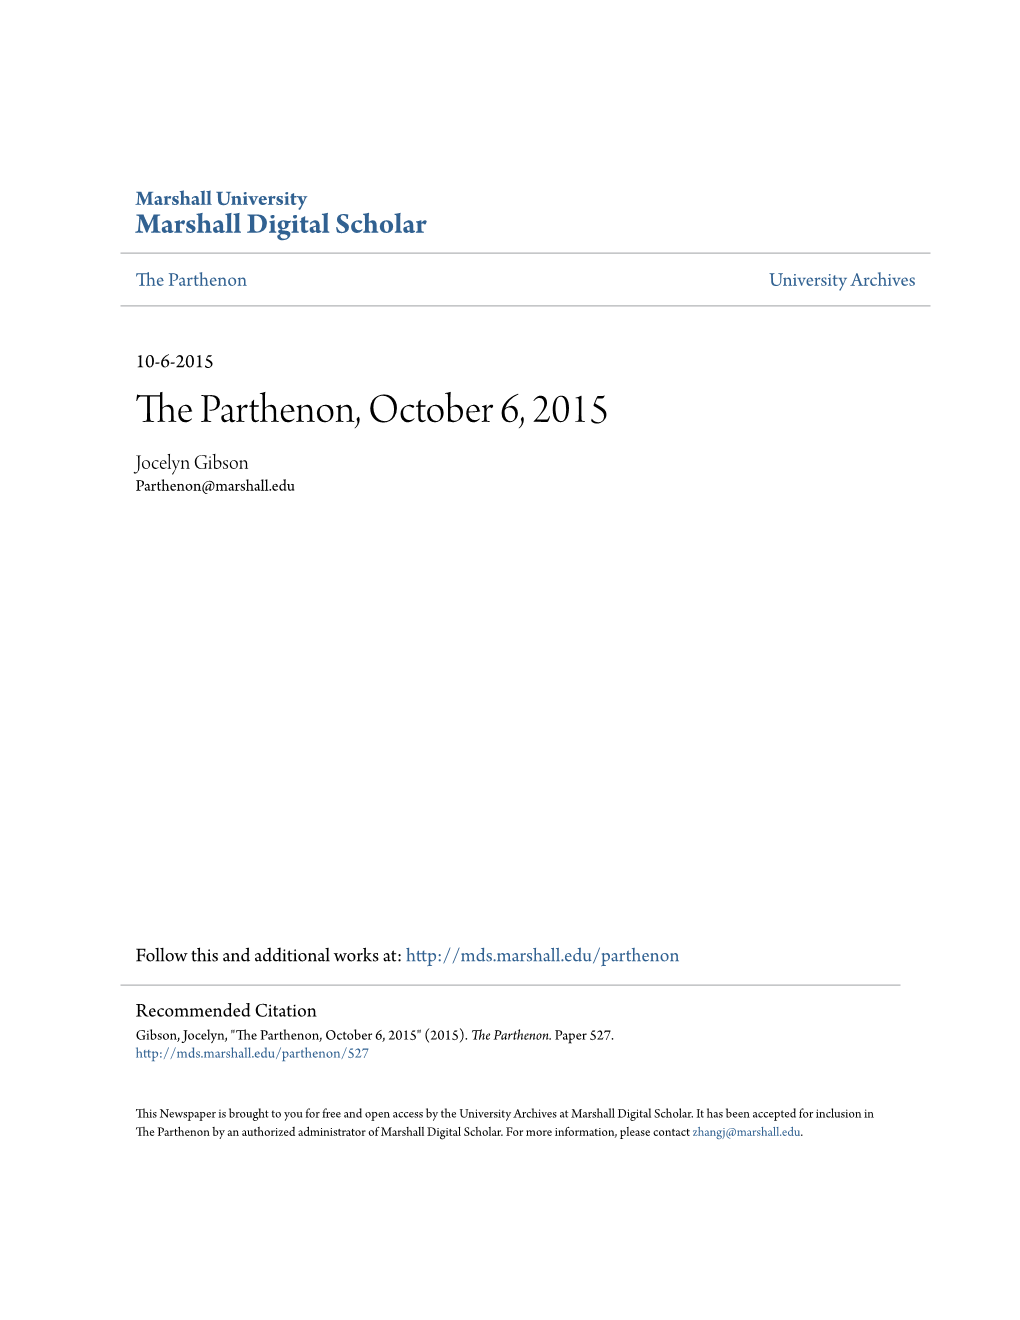 The Parthenon, October 6, 2015